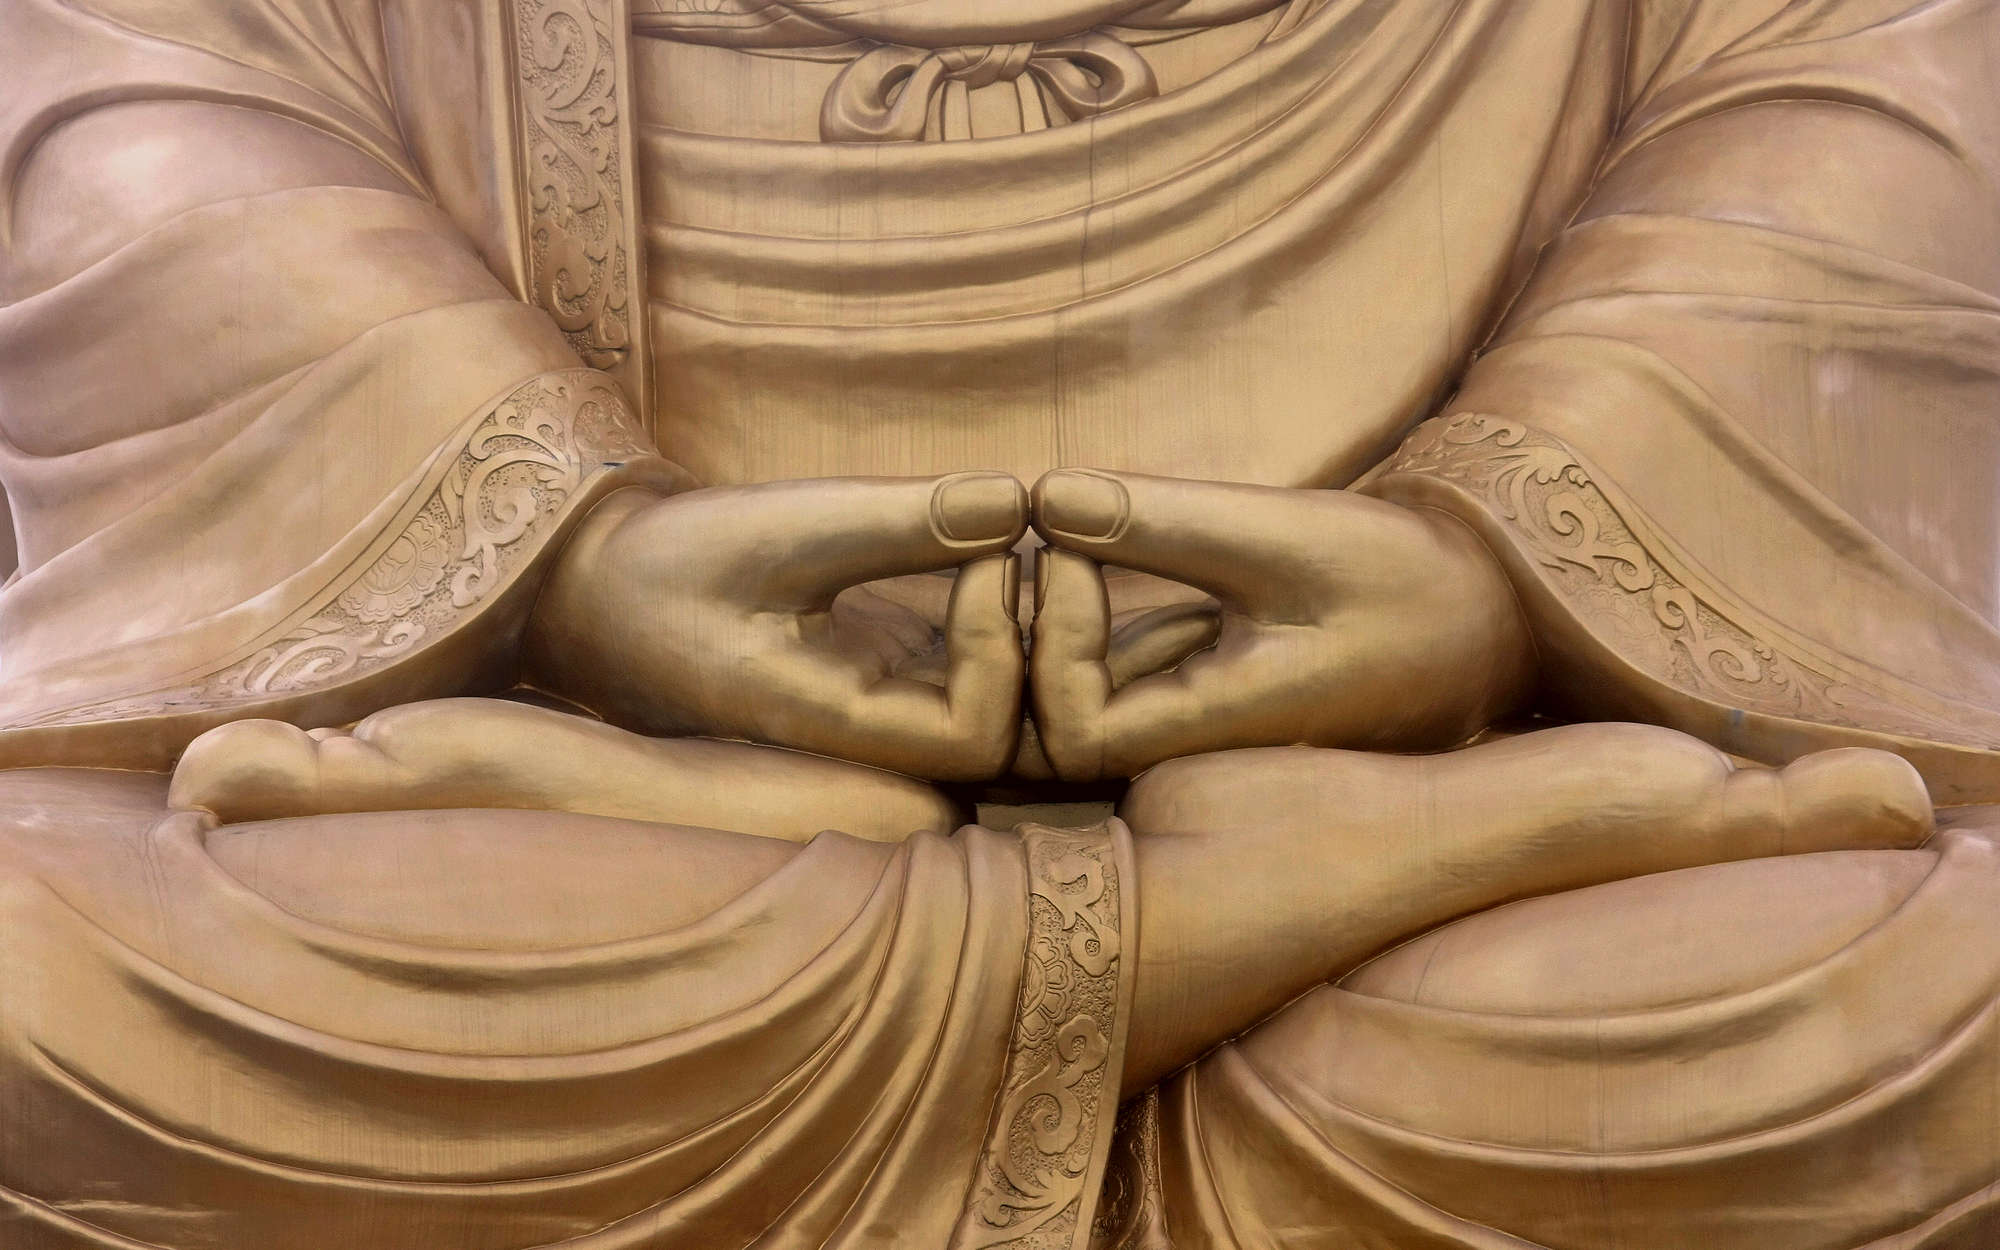             Photo wallpaper Religion Buddha Statue - Textured non-woven
        